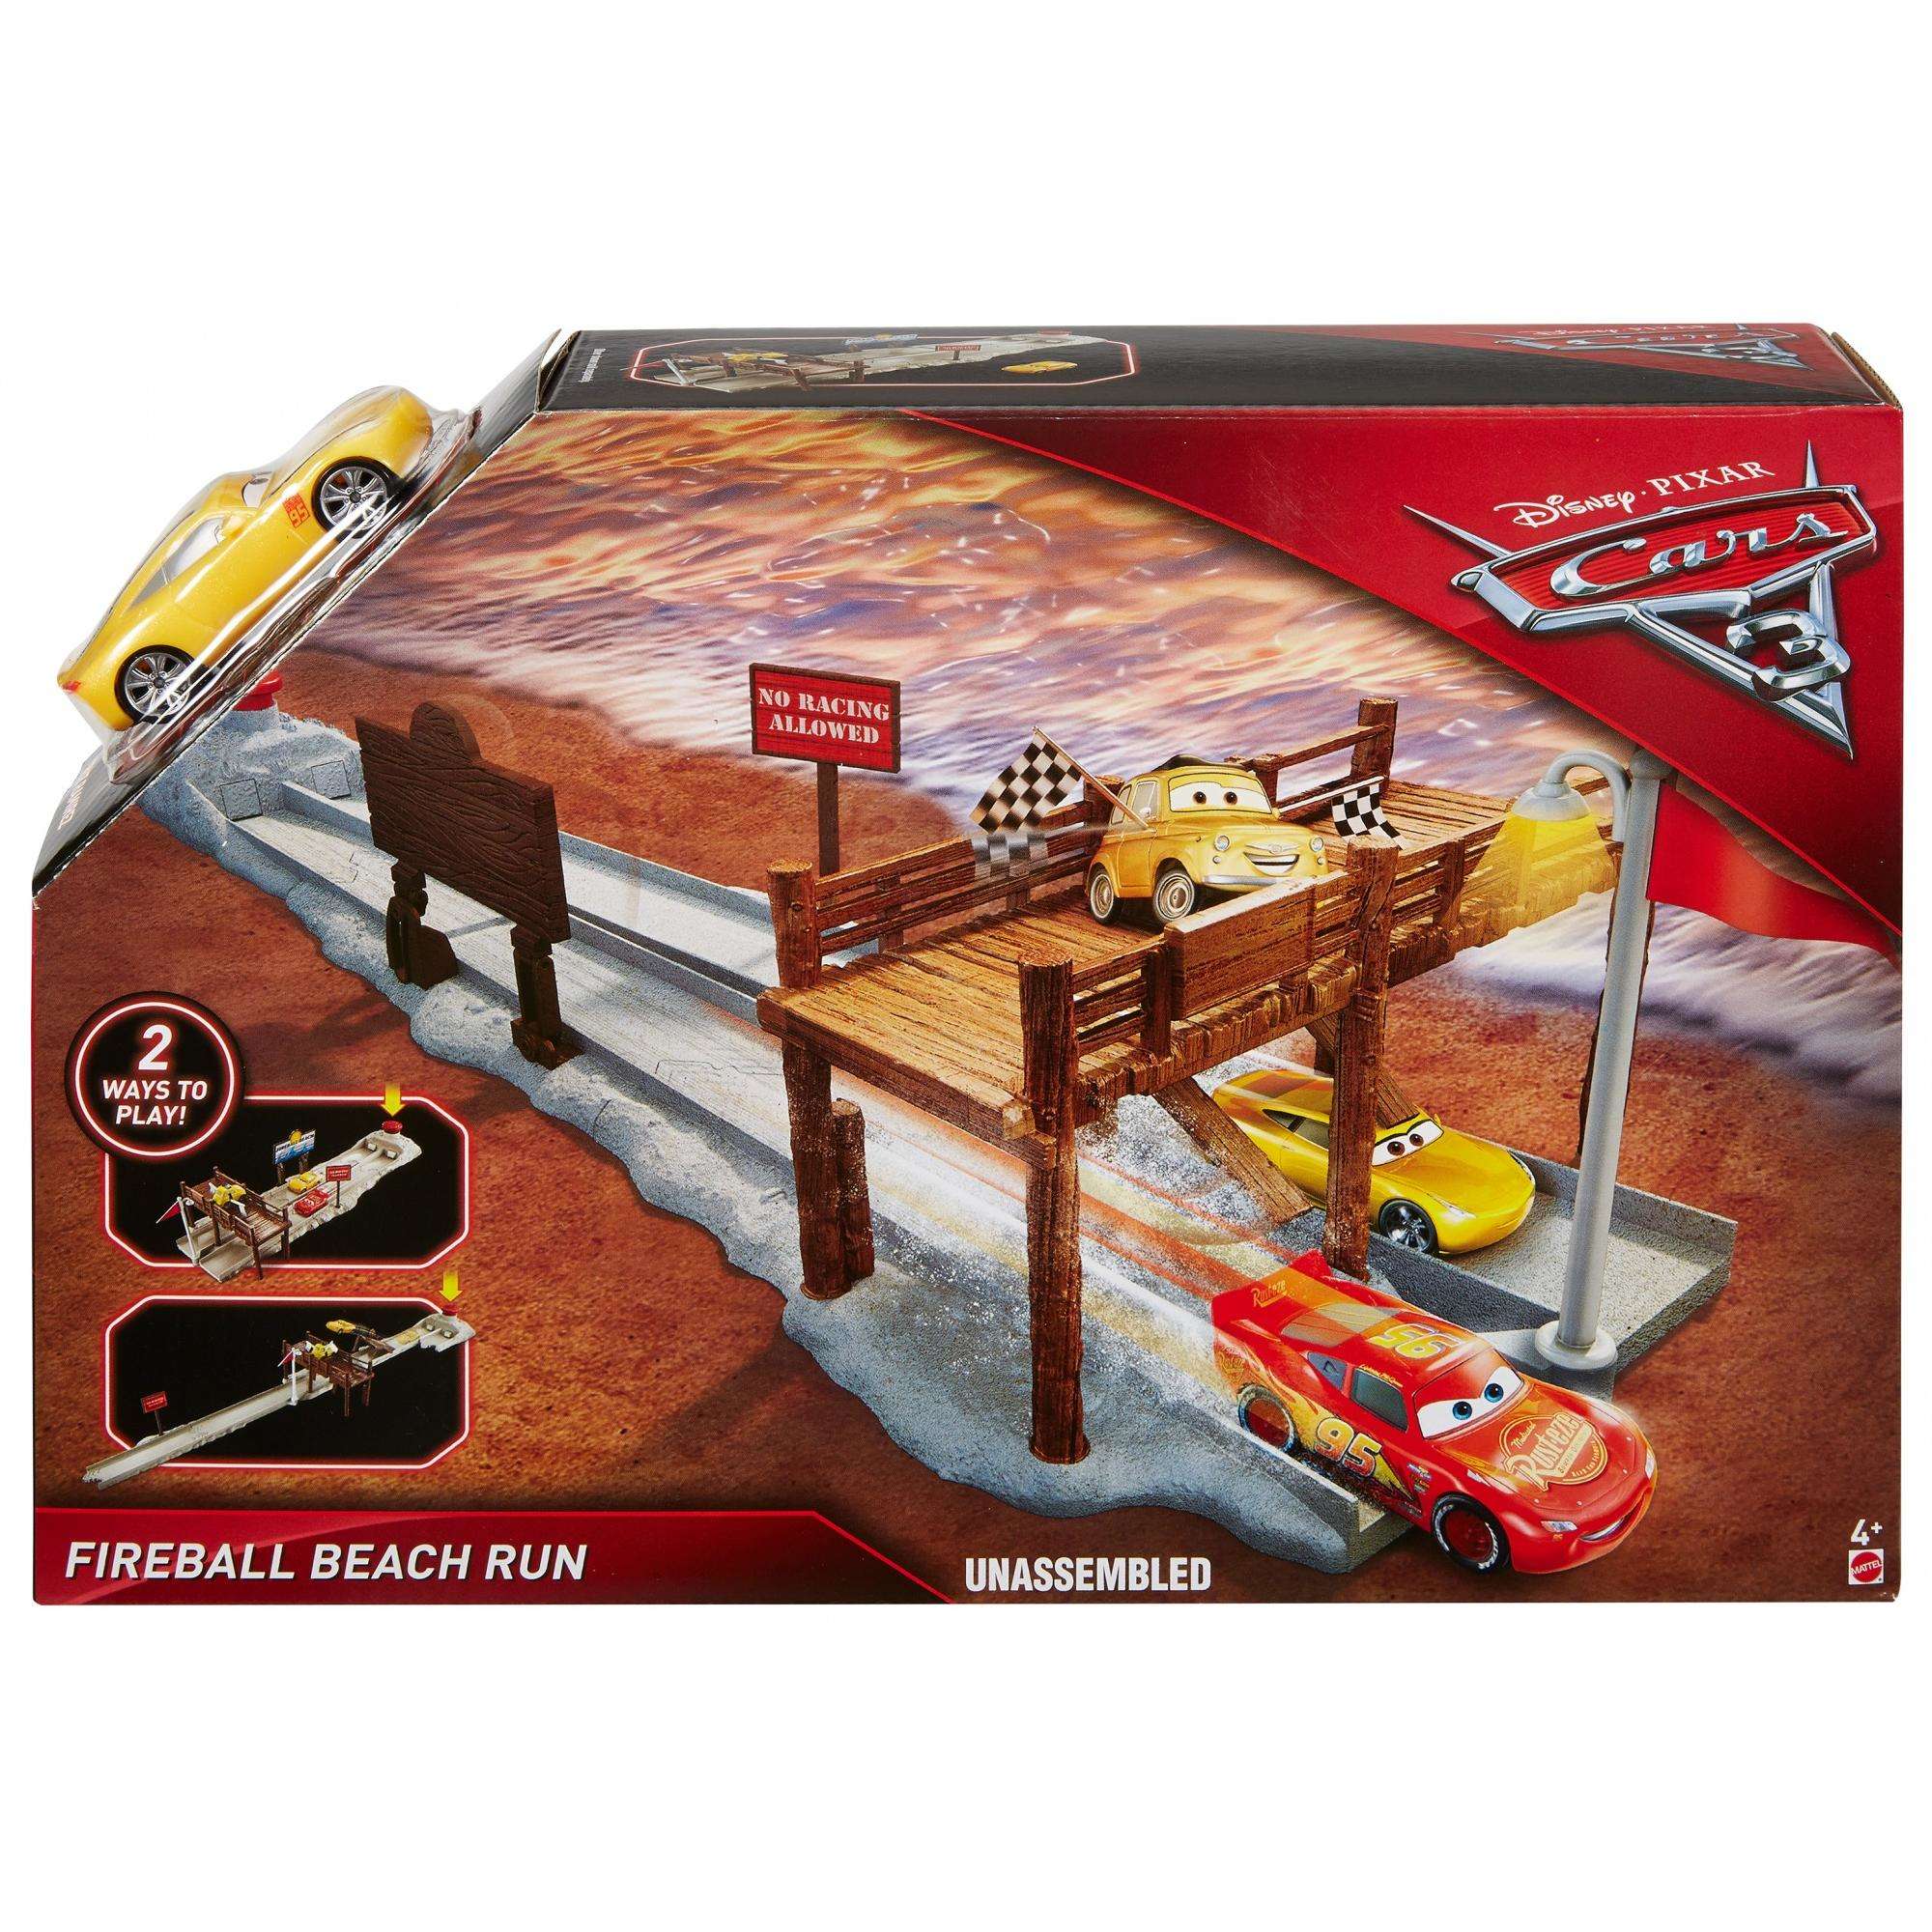 Disney Pixar Cars 3 Fireball Beach Run Playset - image 5 of 10